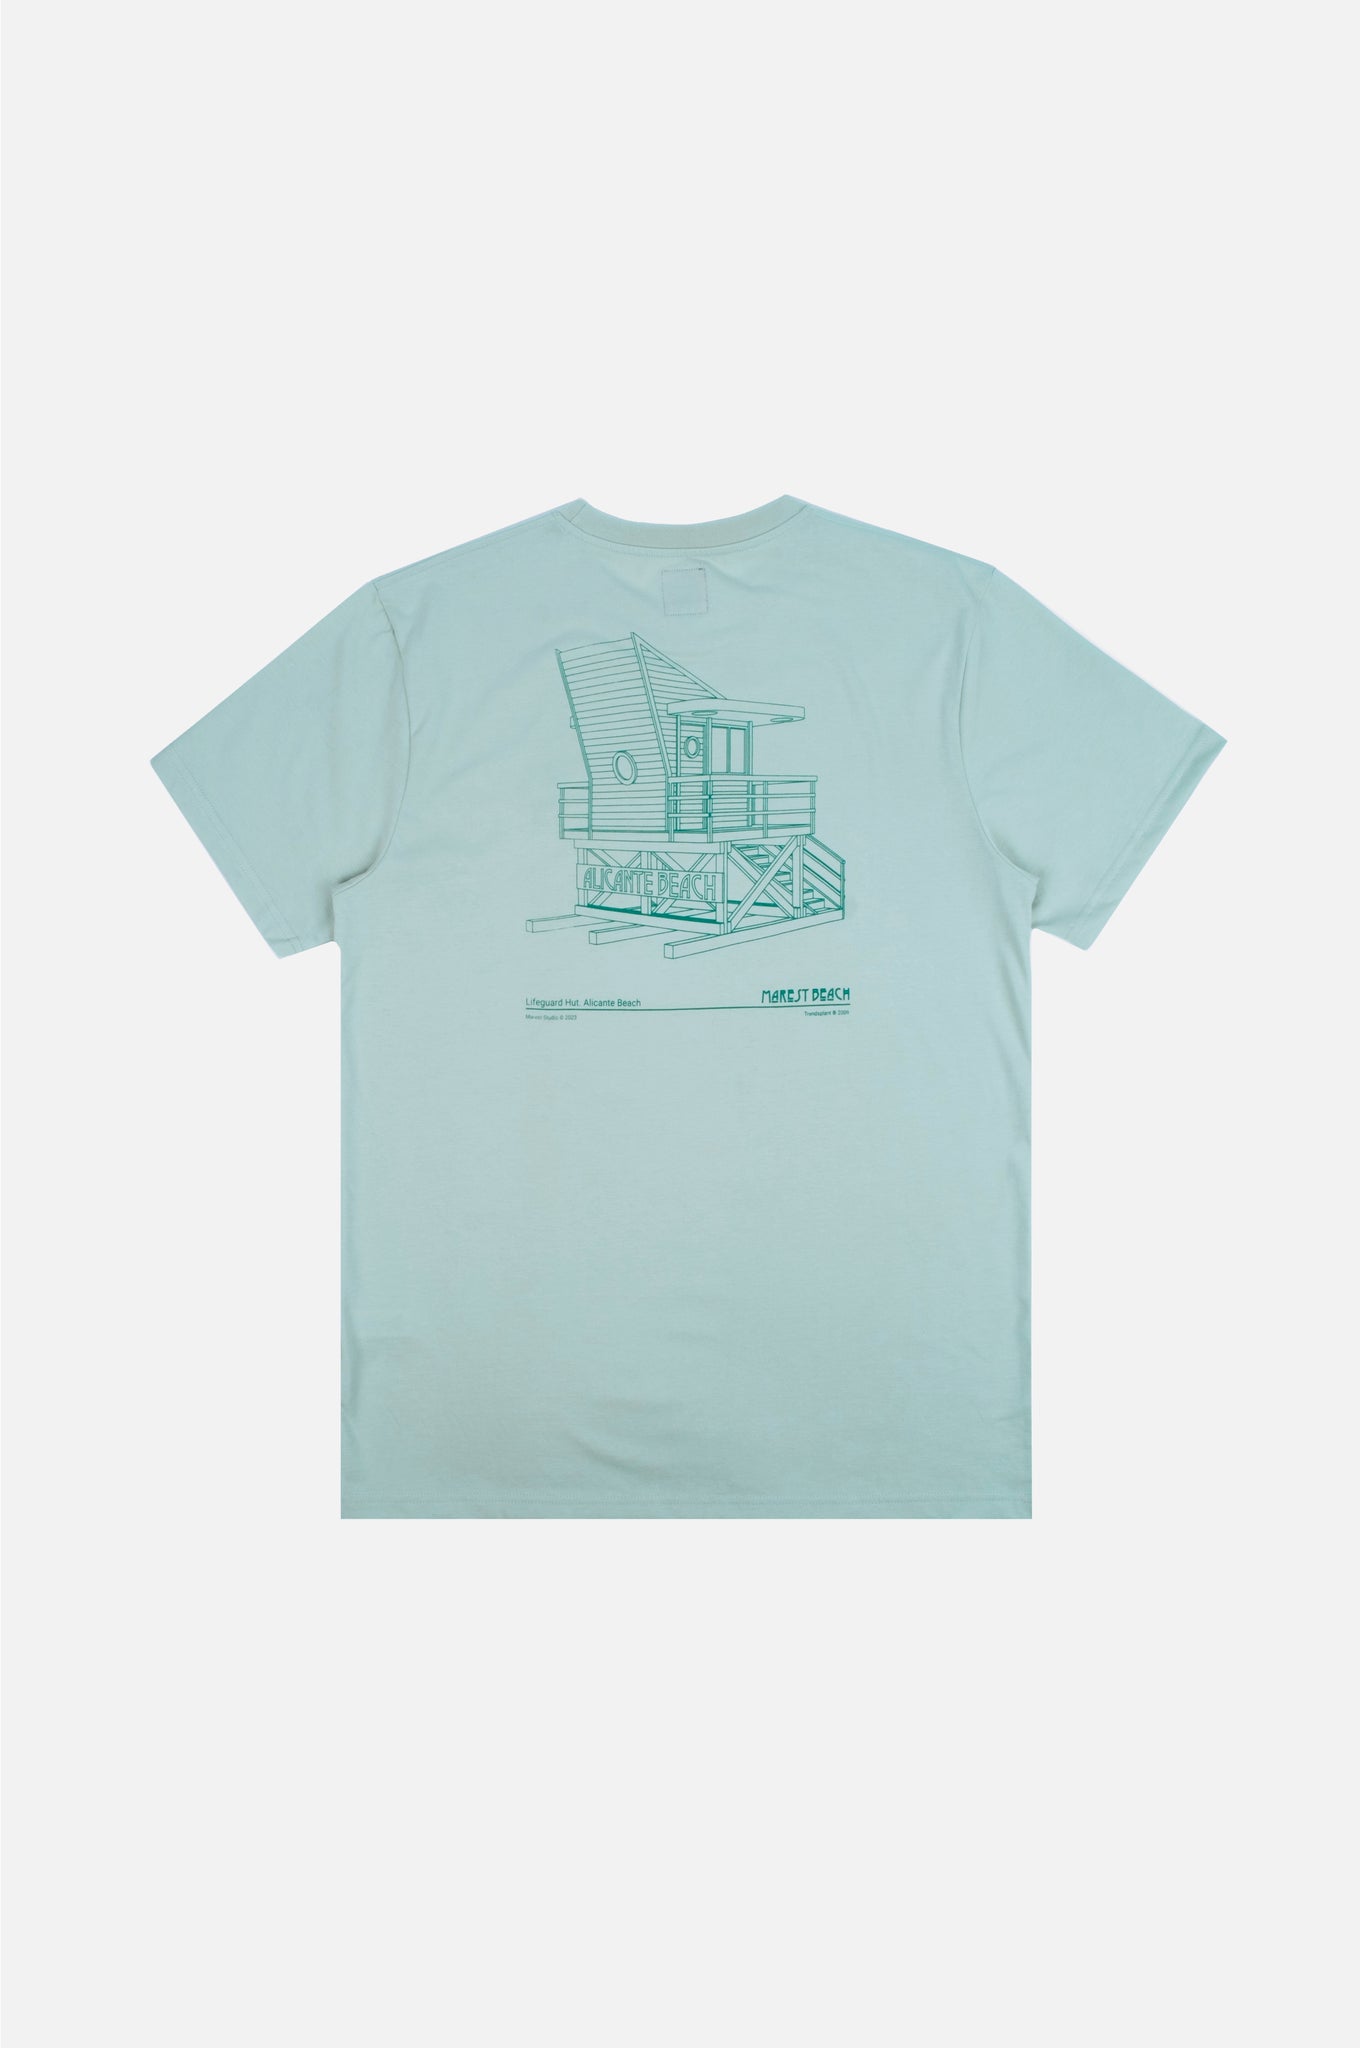 Antonyo Marest x Trendsplant Sketch T-Shirt Paris Green